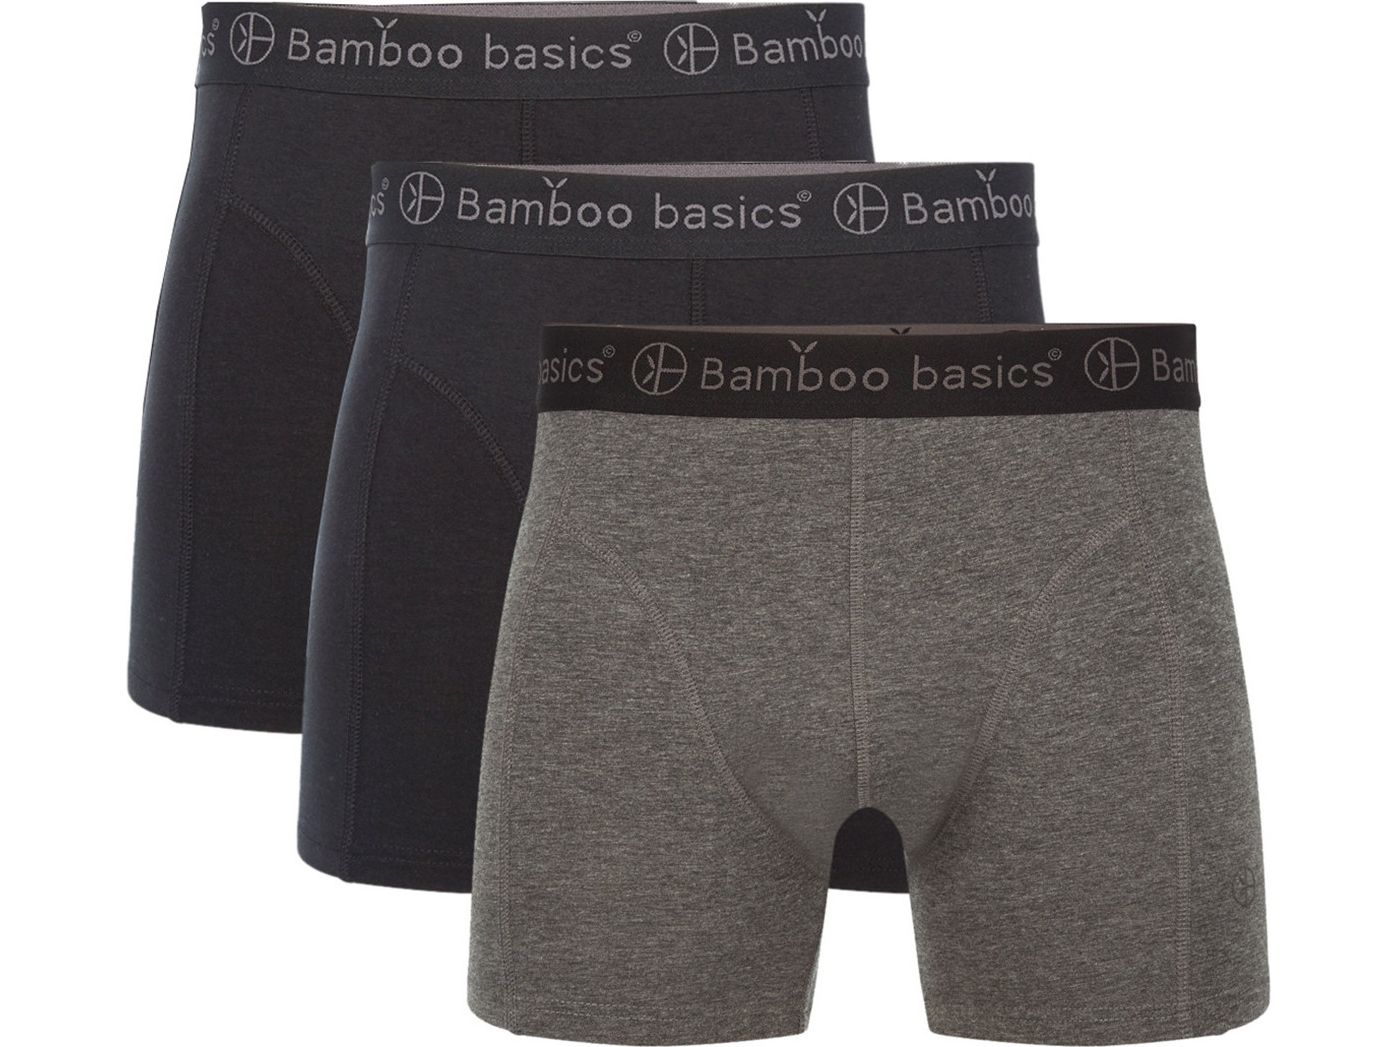 12x-bamboo-basics-rico-boxershorts